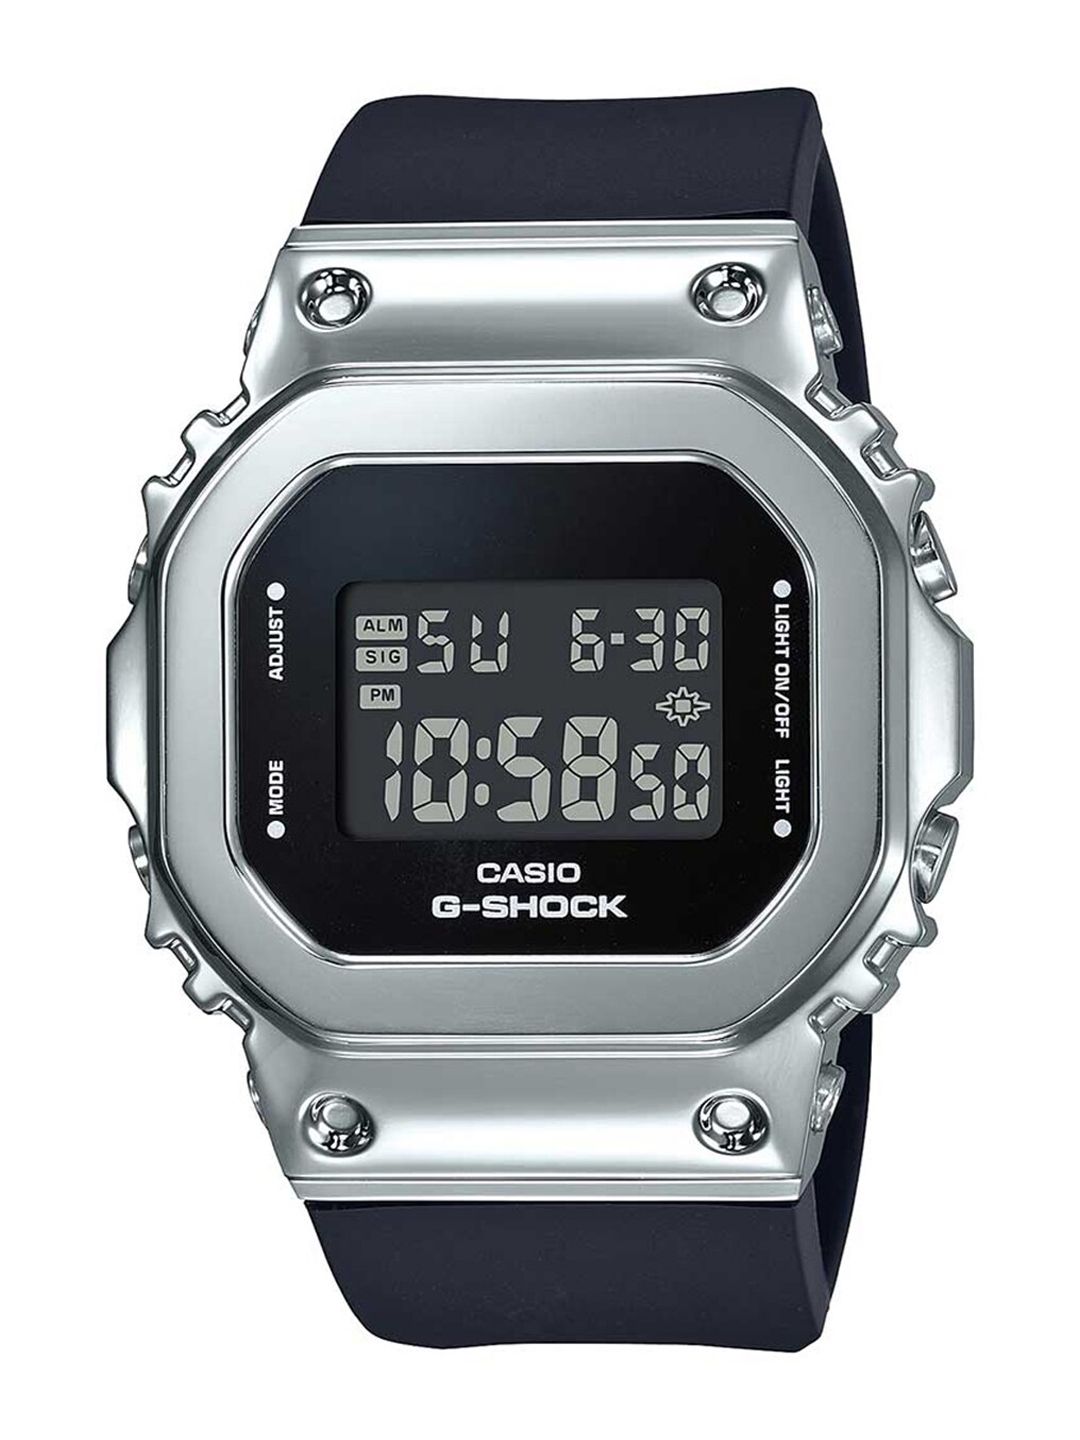 CASIO G-Shock Women Silver-Toned Digital Watch G1068 Price in India